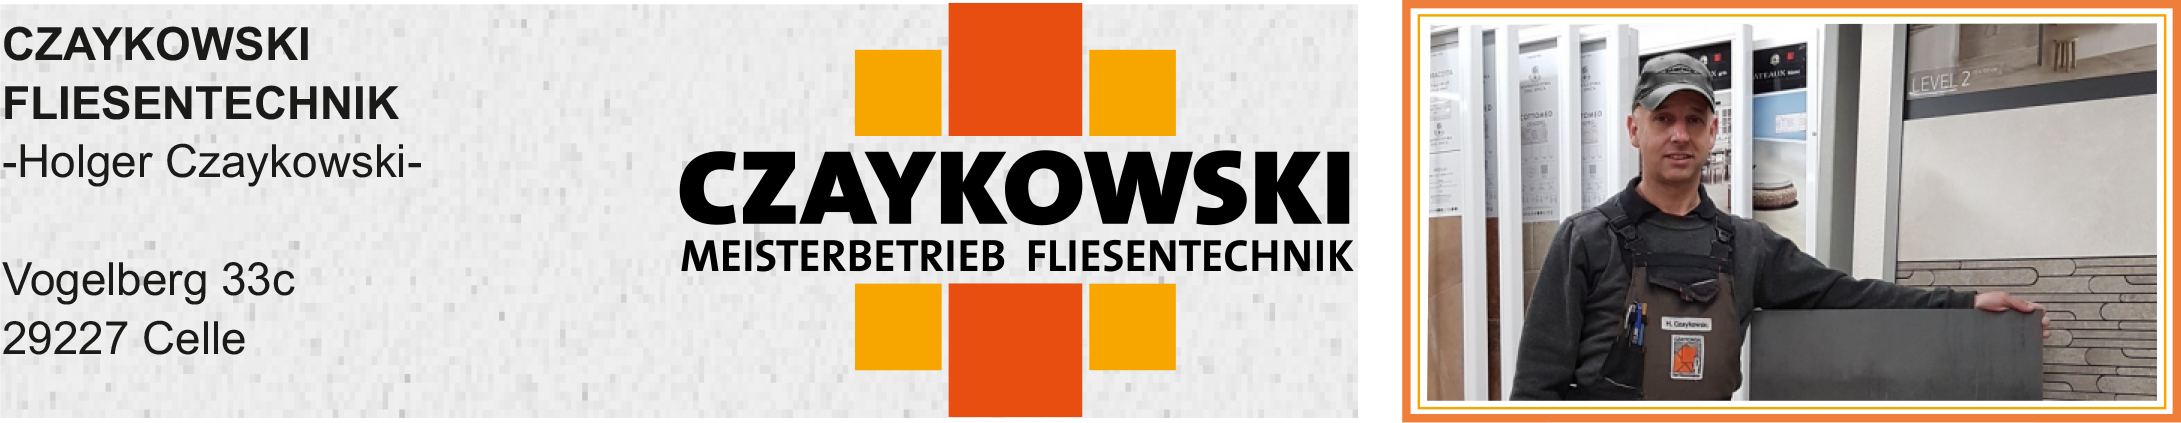 Czaykowski-Fliesen-Celle - Logo